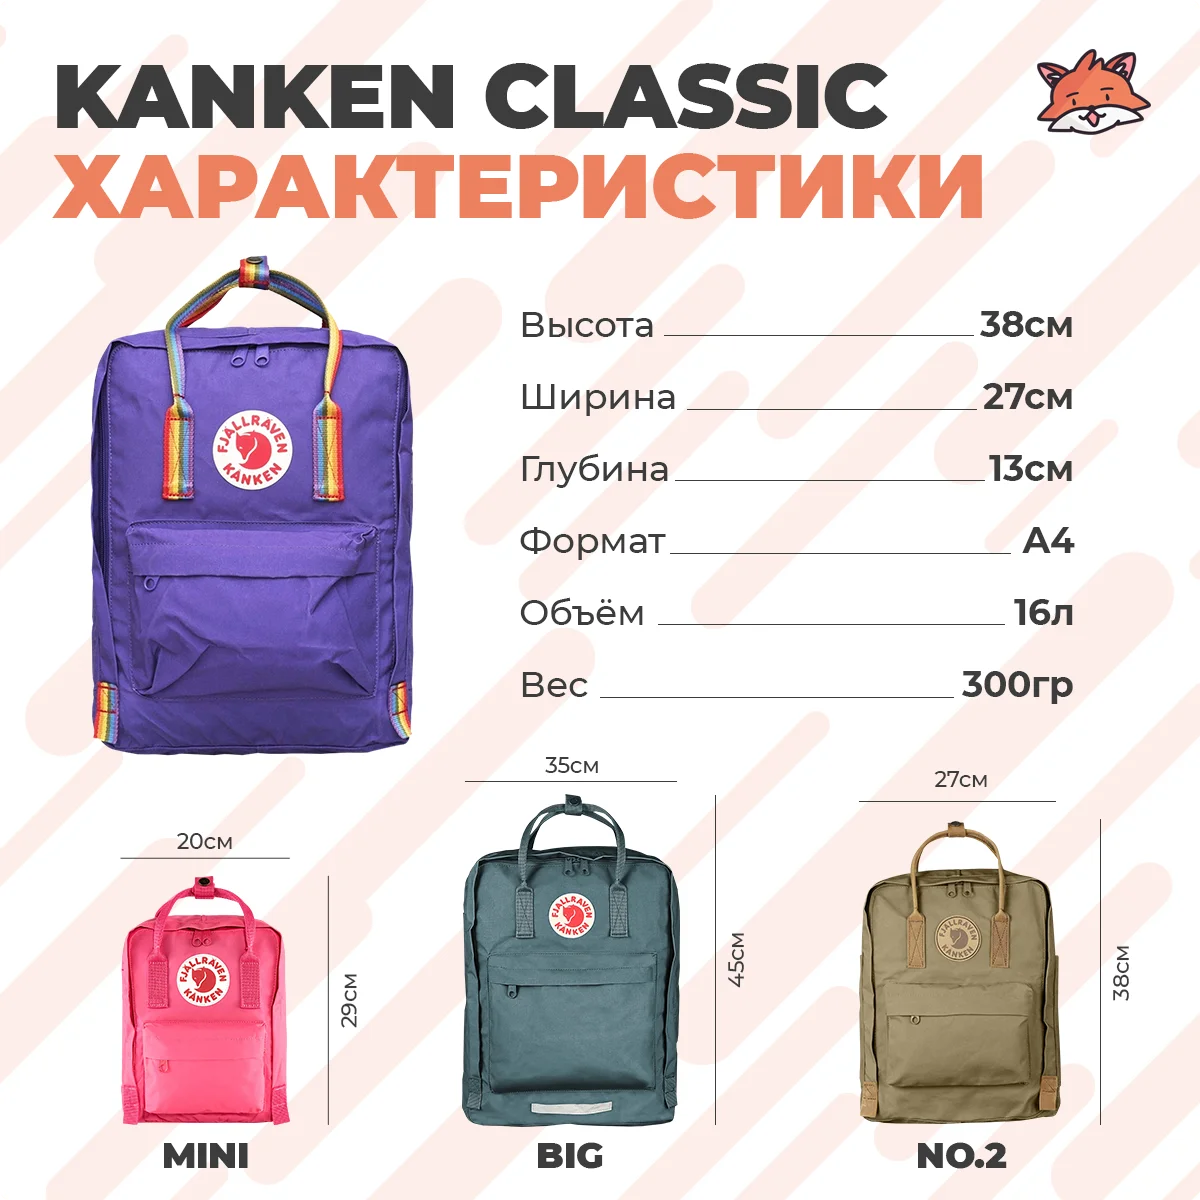 Kanken Backpack - Backpacks - AliExpress